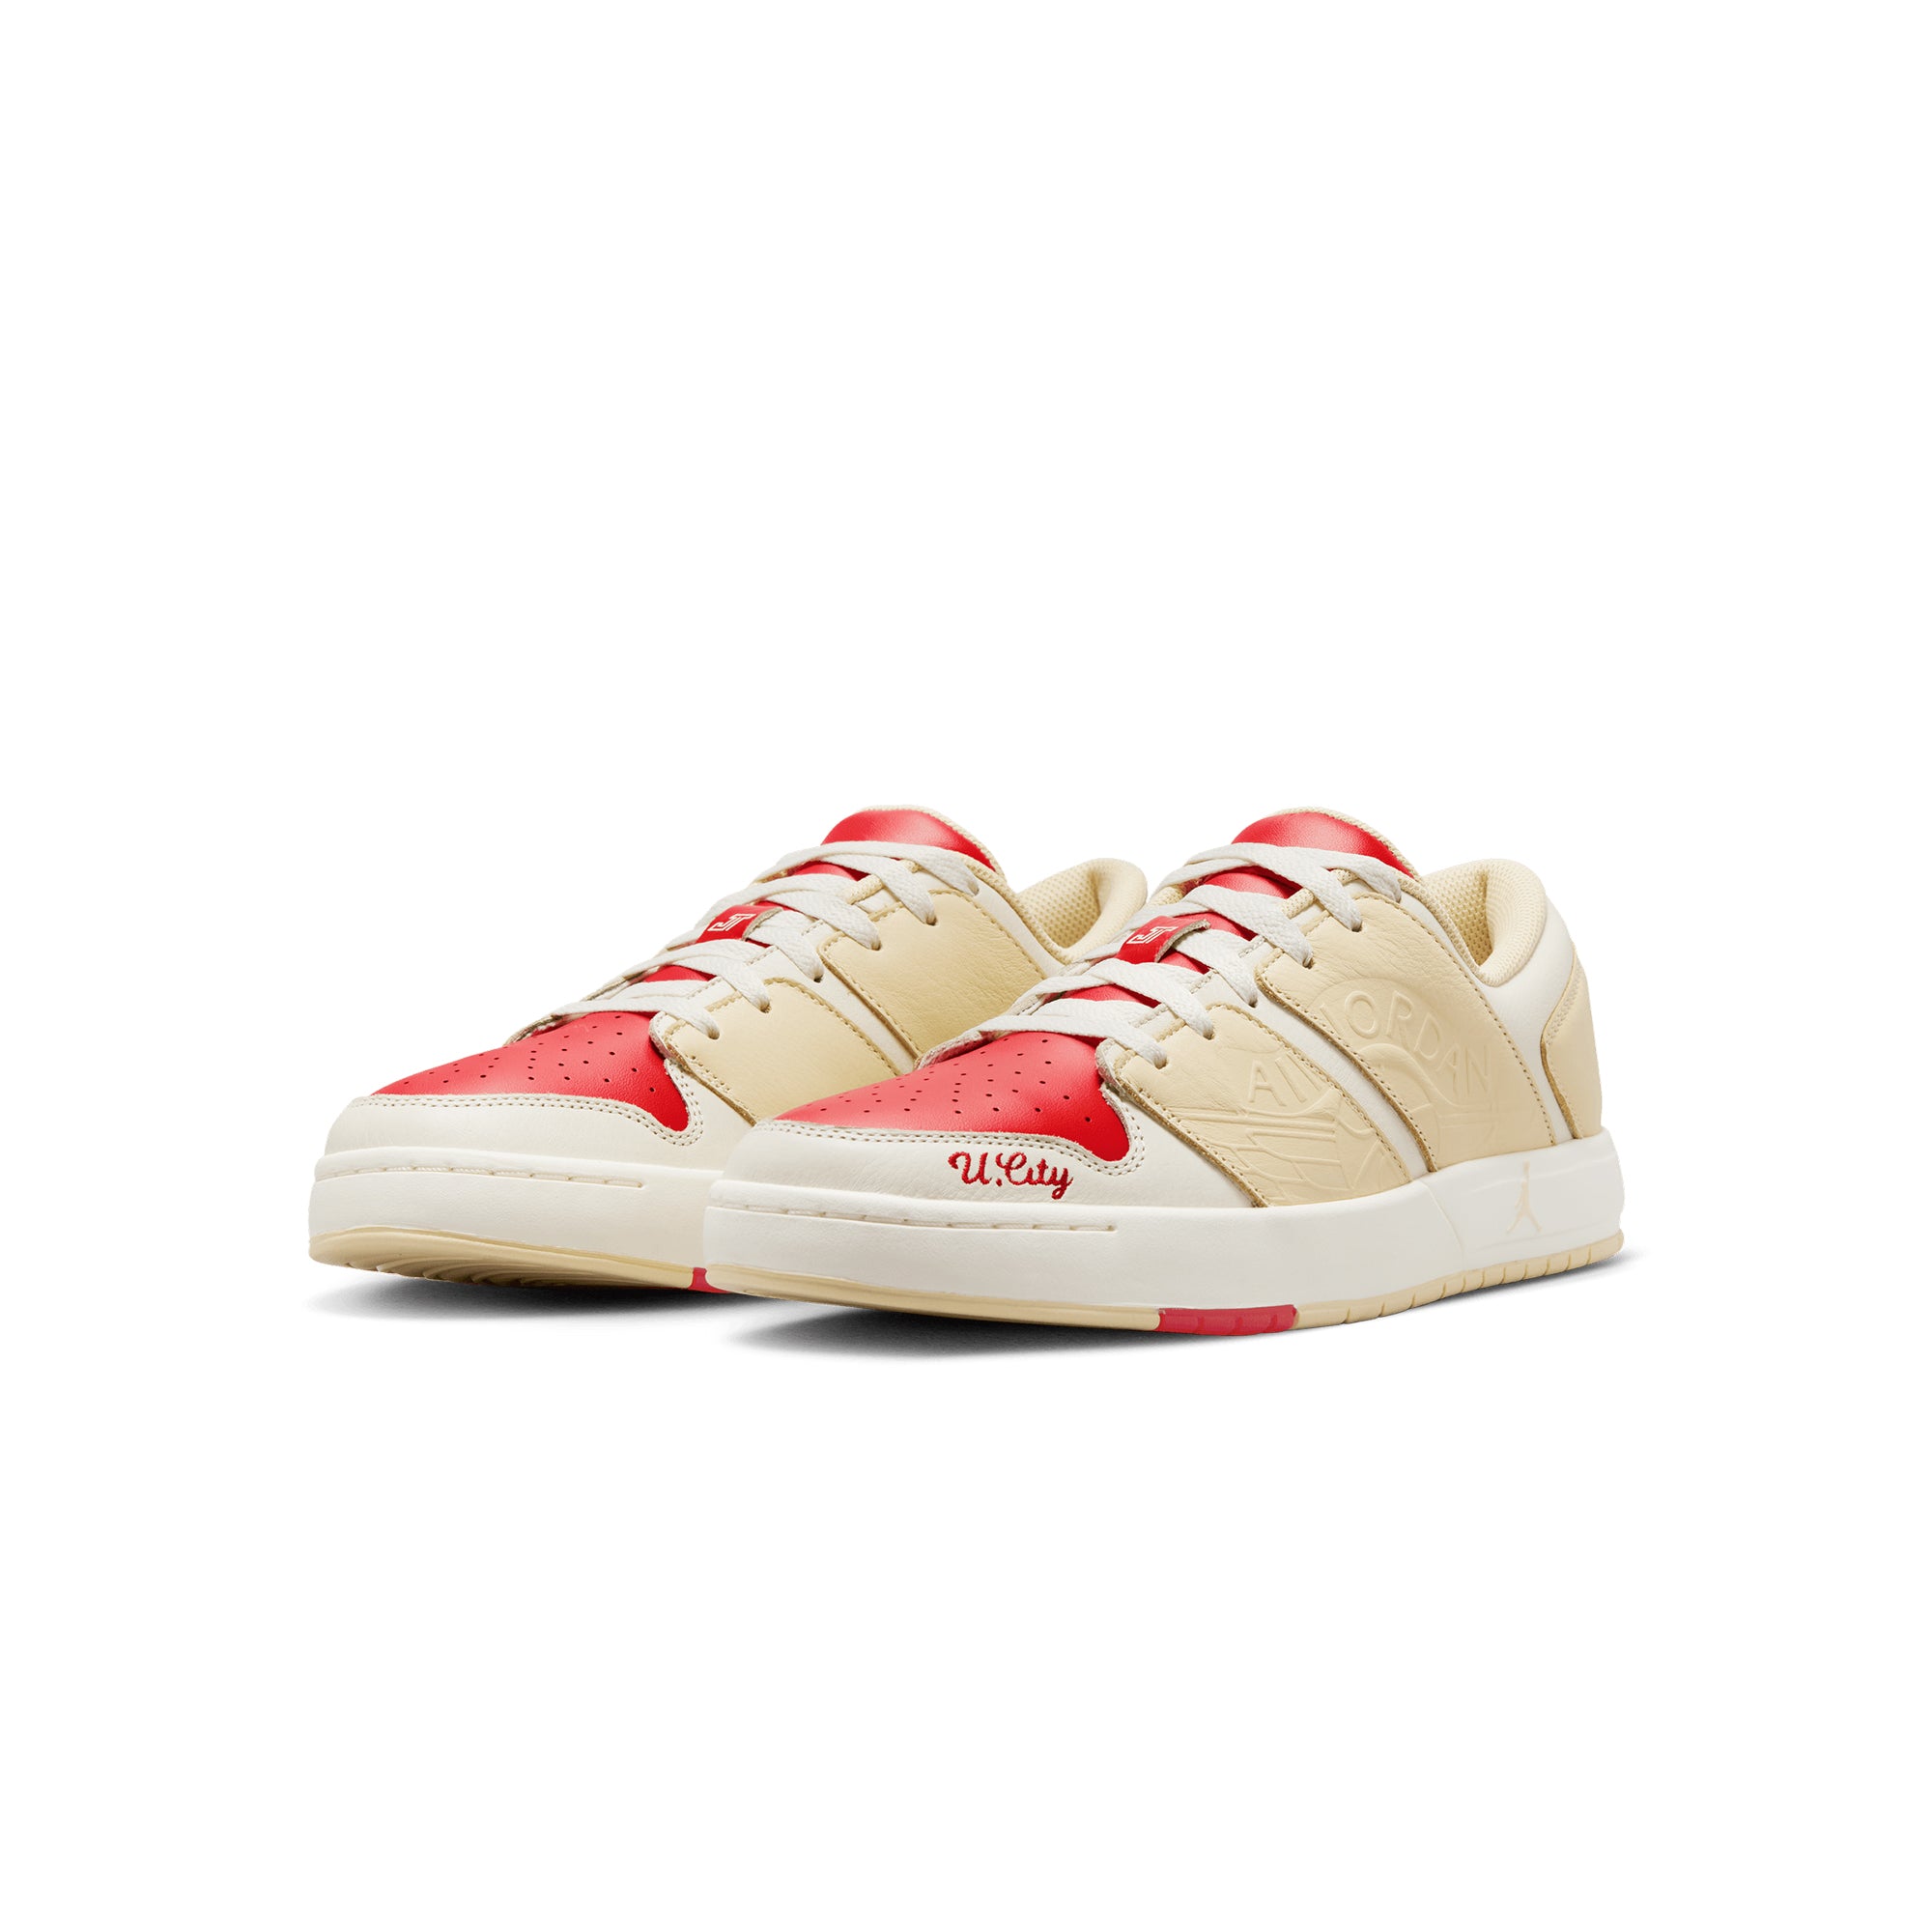 Air Jordan 37 Jayson Tatum Shoes - Size 10 - Pale Vanilla / University Red